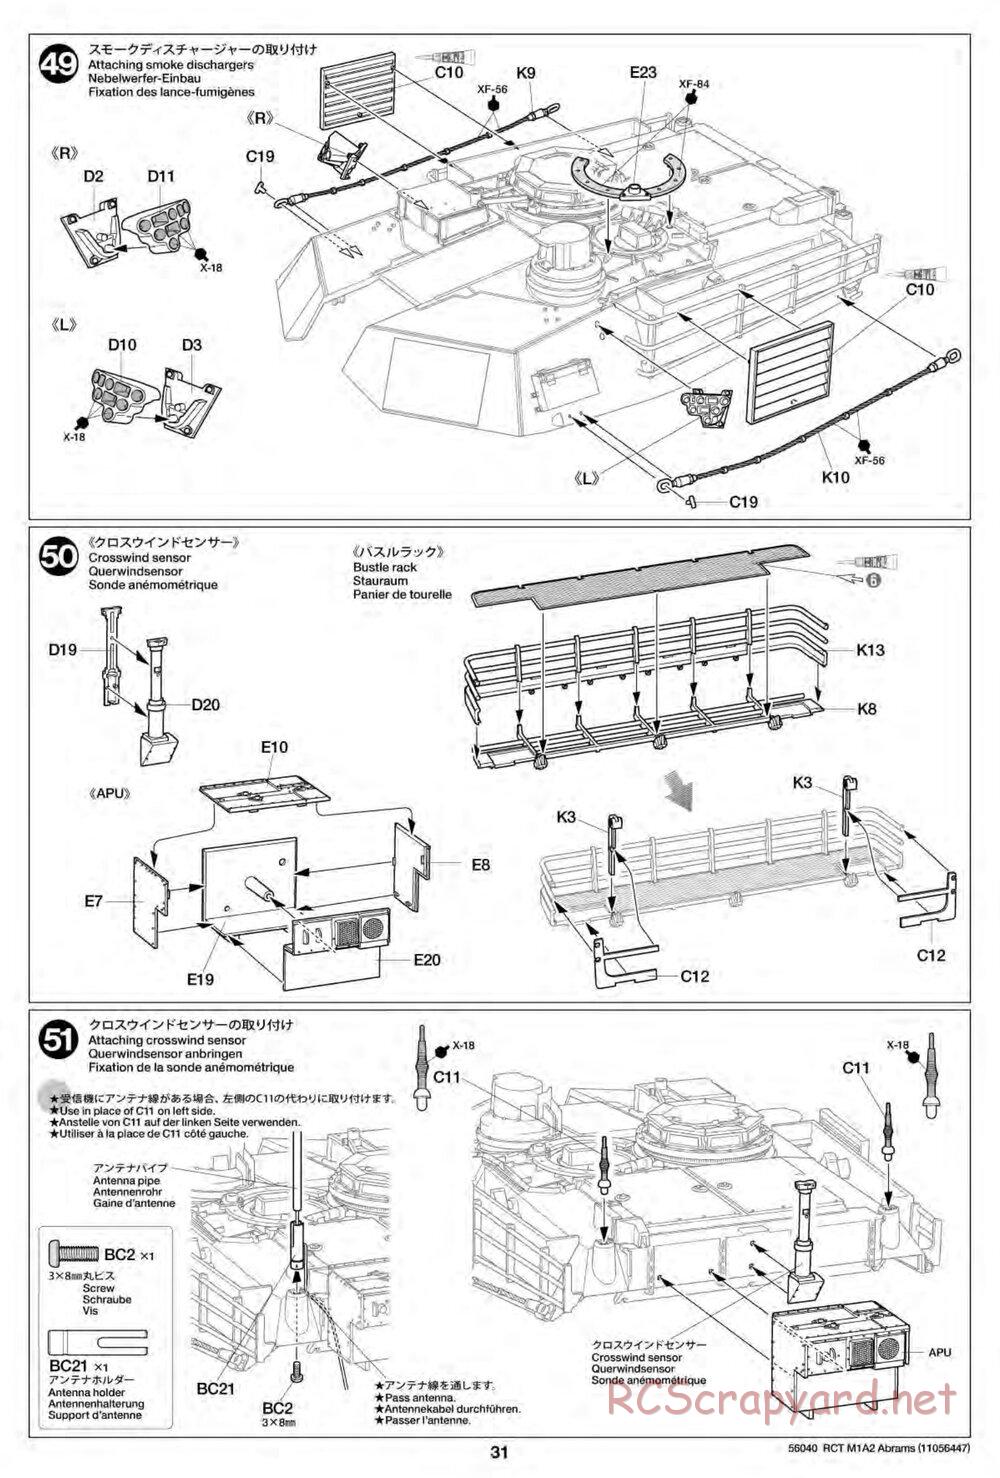 Tamiya - U.S. Main Battle Tank M1A2 Abrams - 1/16 Scale Chassis - Manual - Page 31